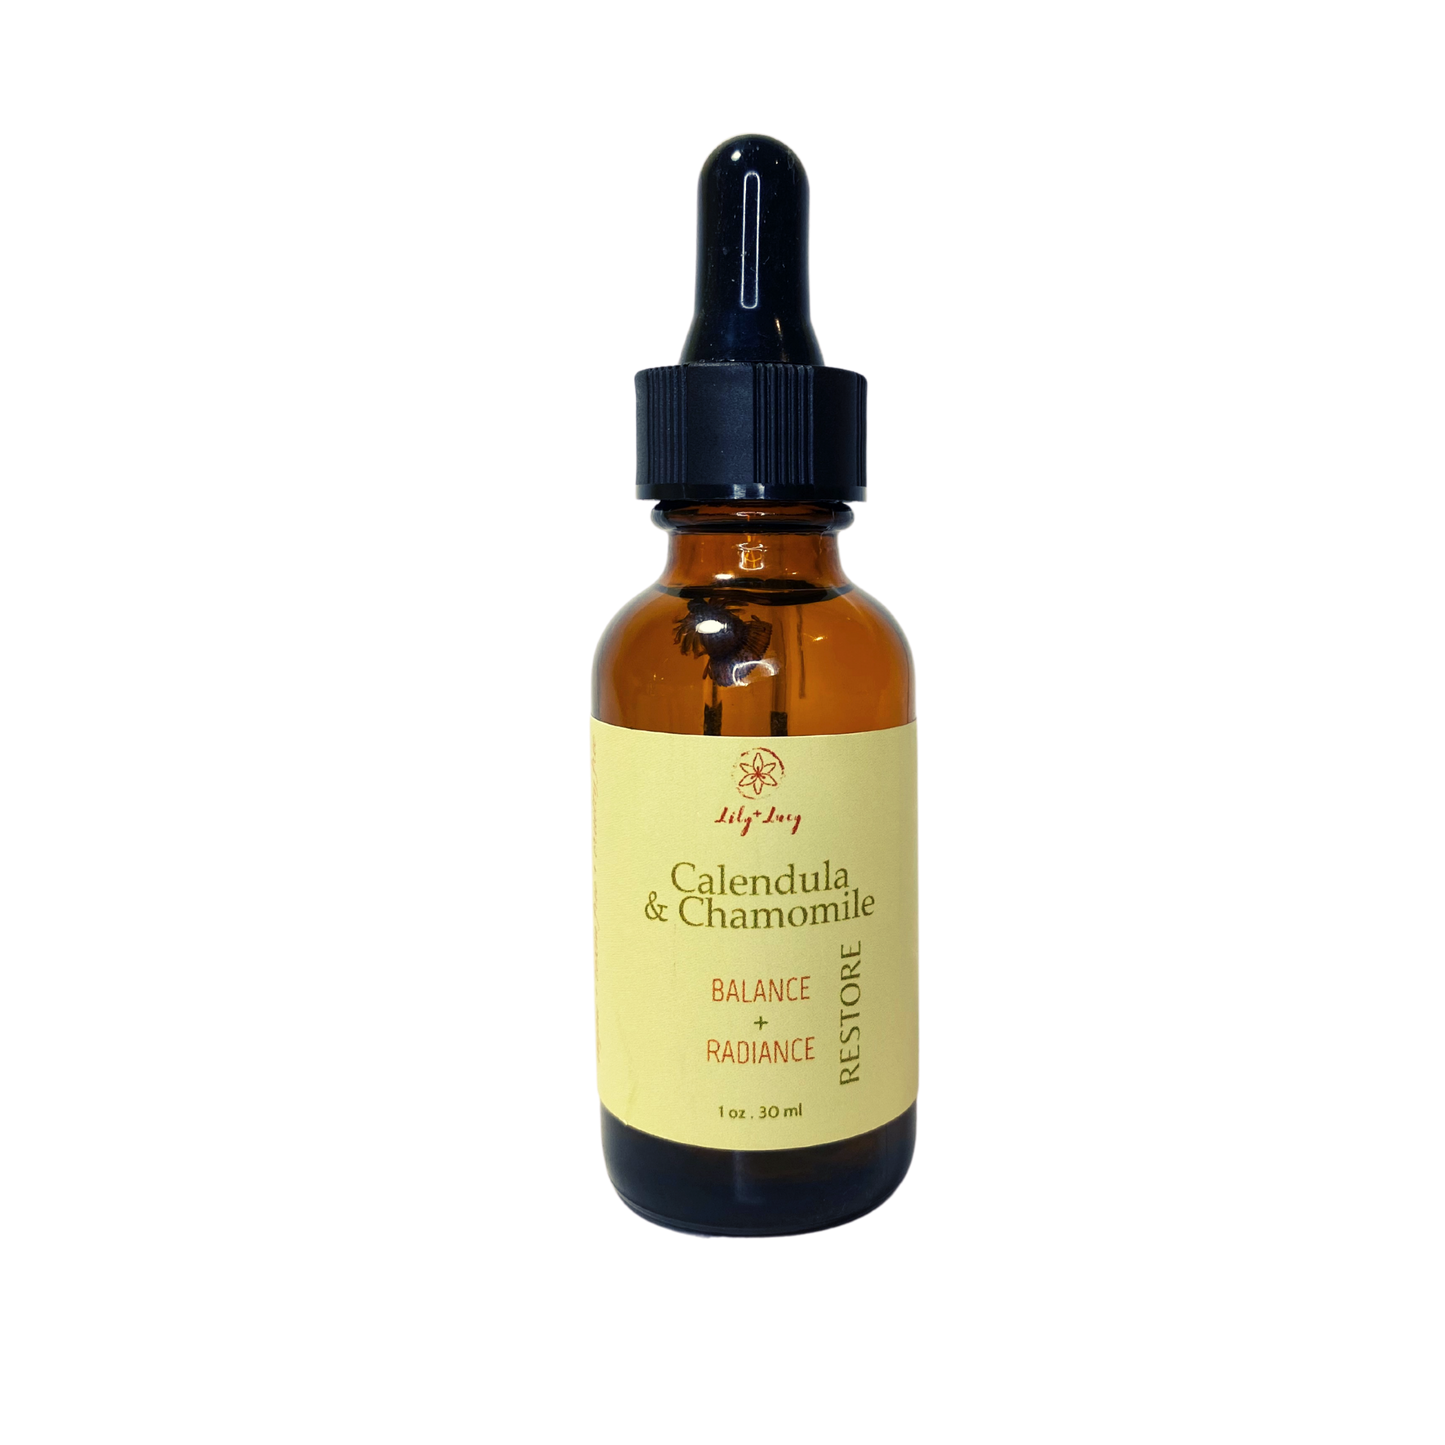 Calendula & Chamomile Body Oil